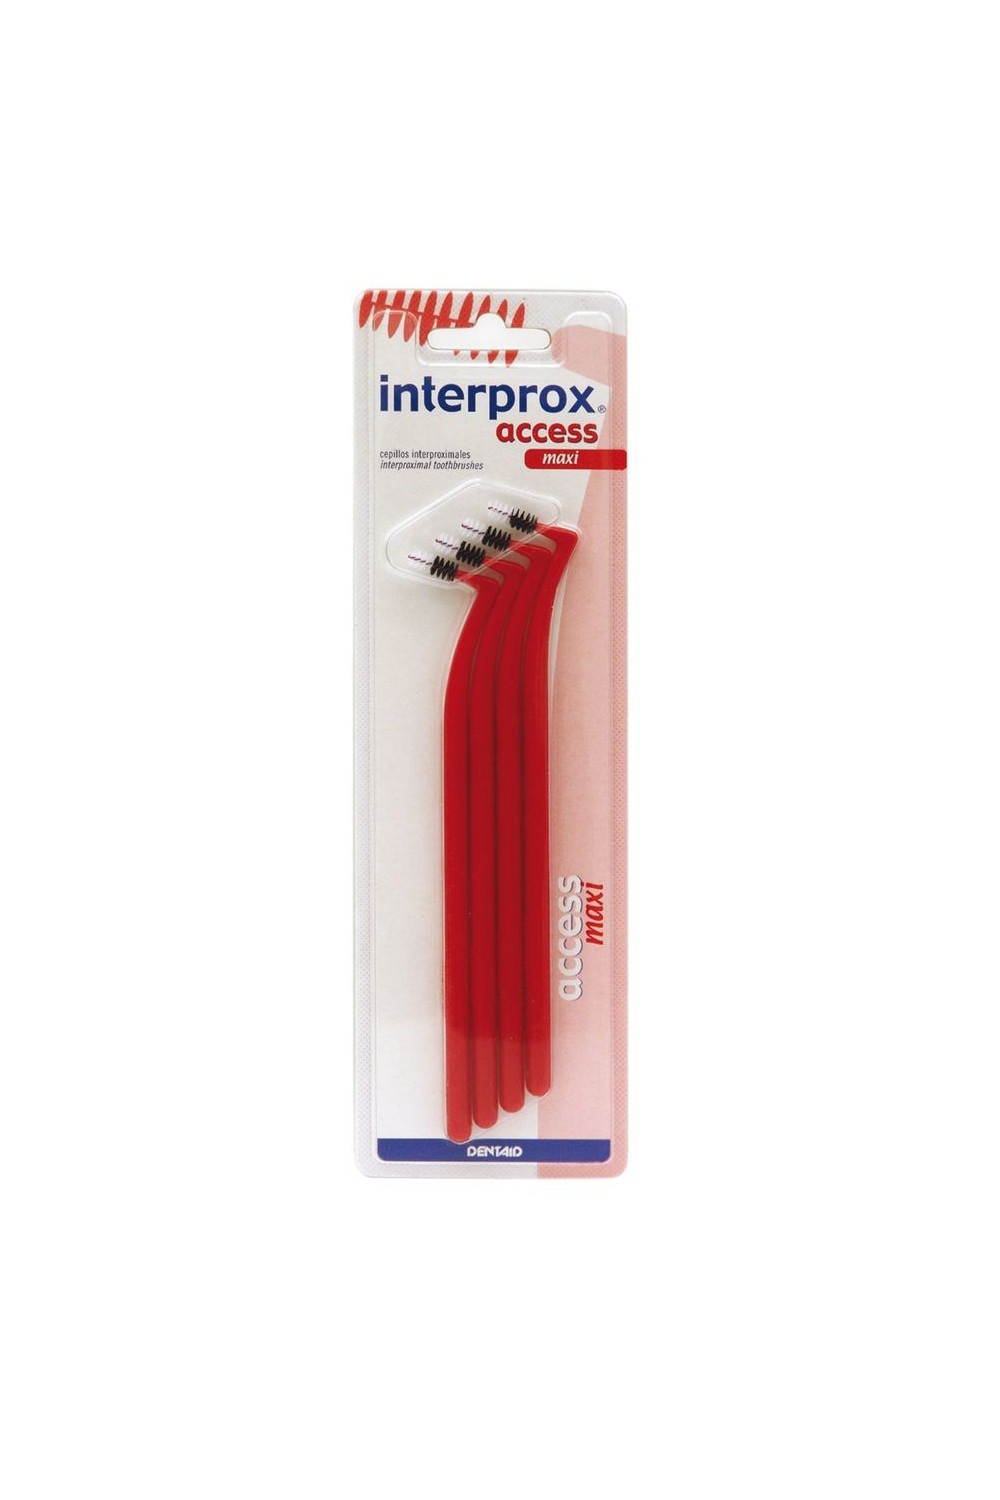 Interprox Vitis Interdent Dentaid Acces Maxi Larg 4u Toothbrush